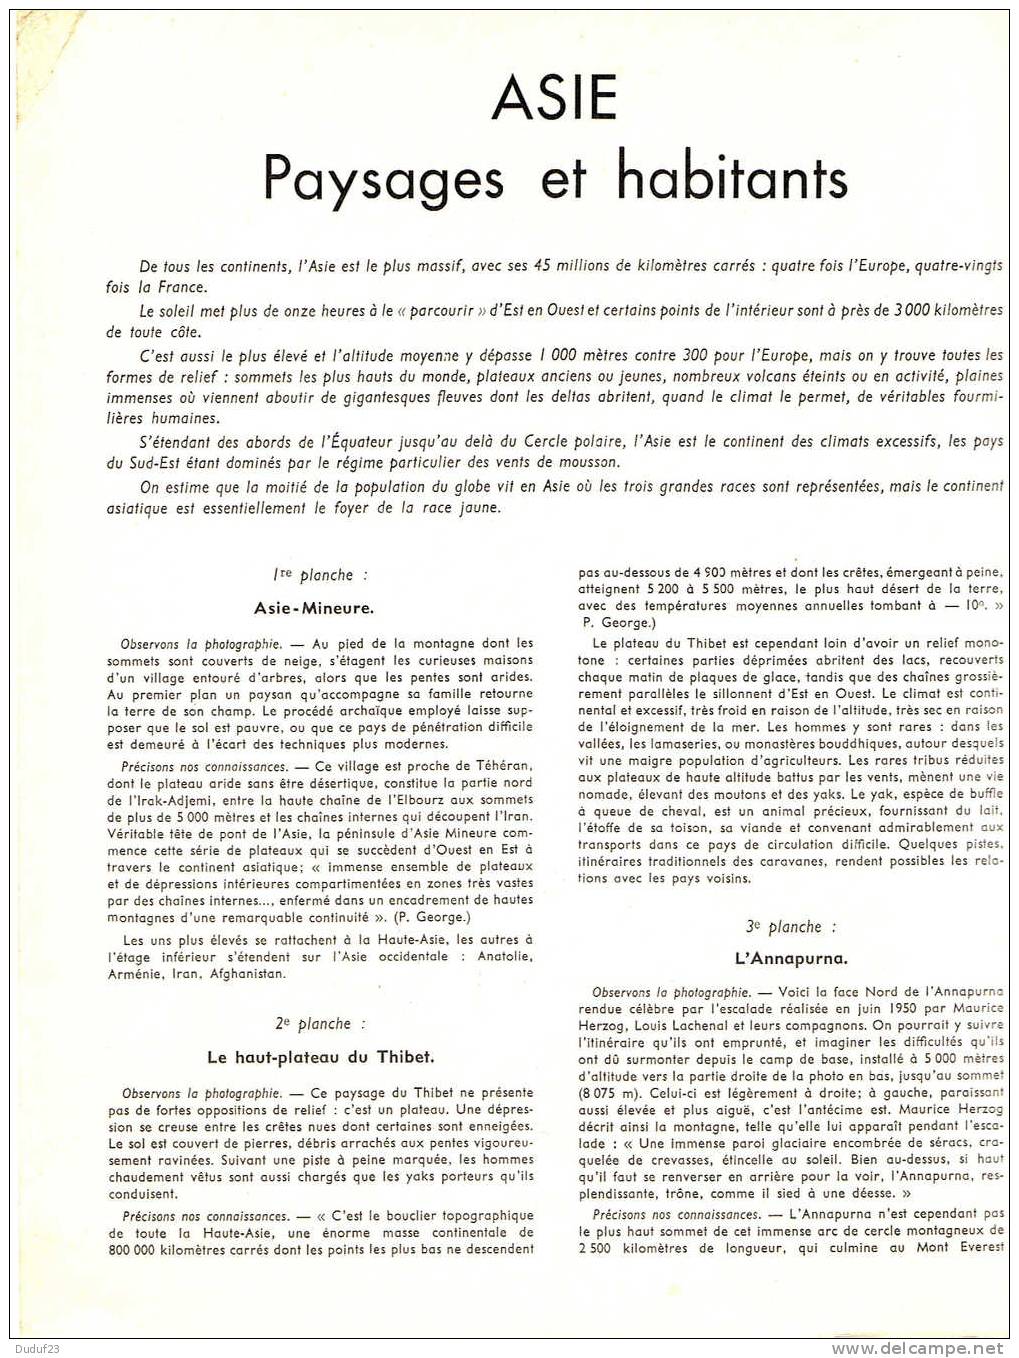 ASIE PAYSAGES ET HABITANTS - DOCUMENTATION PEDAGOGIQUE ROSSIGNOL MONTMORILLON 1957 - Learning Cards